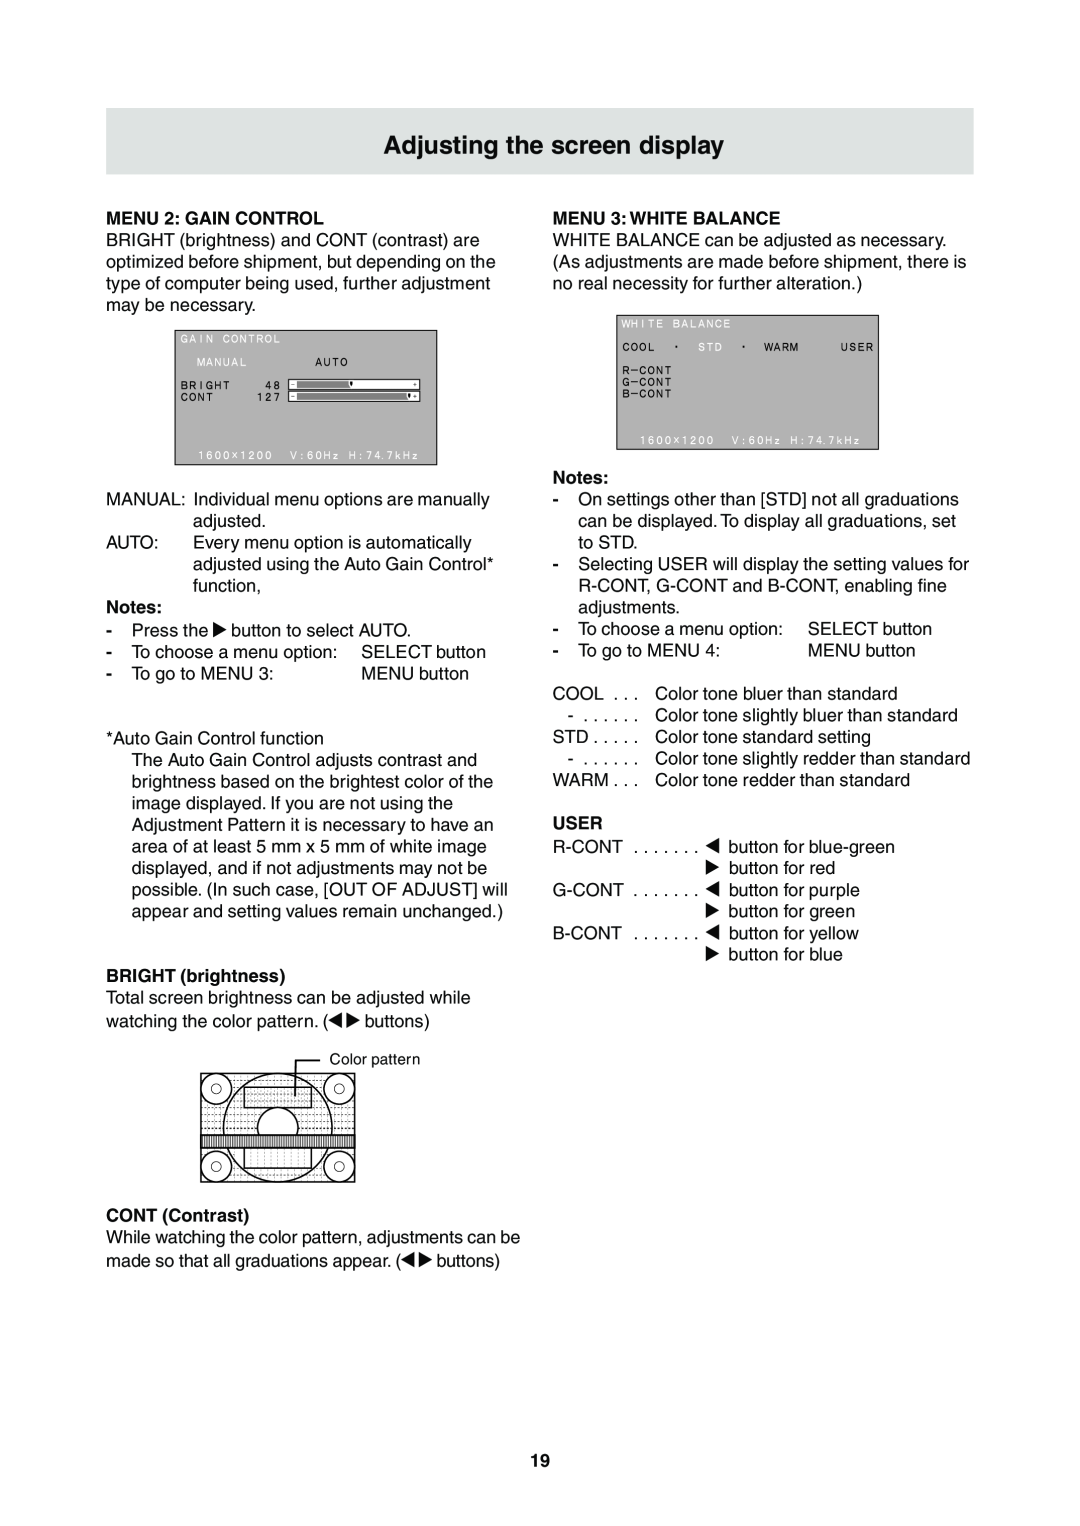 Sharp LL-T2000A operation manual MENU 2 GAIN CONTROL, BRIGHT brightness, MENU 3 WHITE BALANCE, User, CONT Contrast 